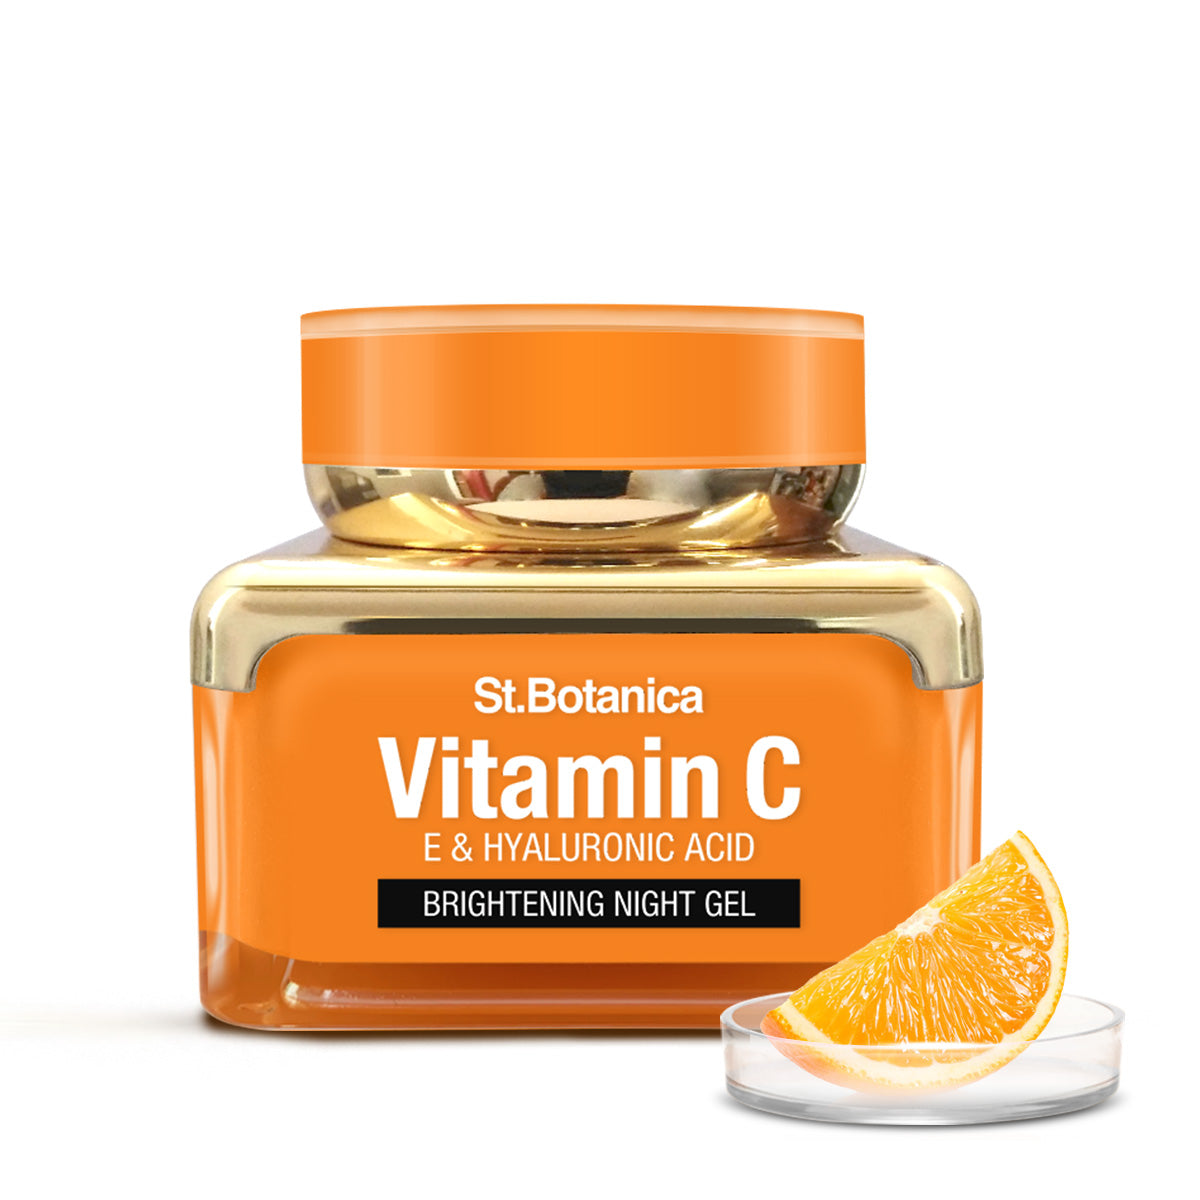 St.Botanica Vitamin C, E & Hyaluronic Acid Brightening Night Gel, 50 g (Night Cream)